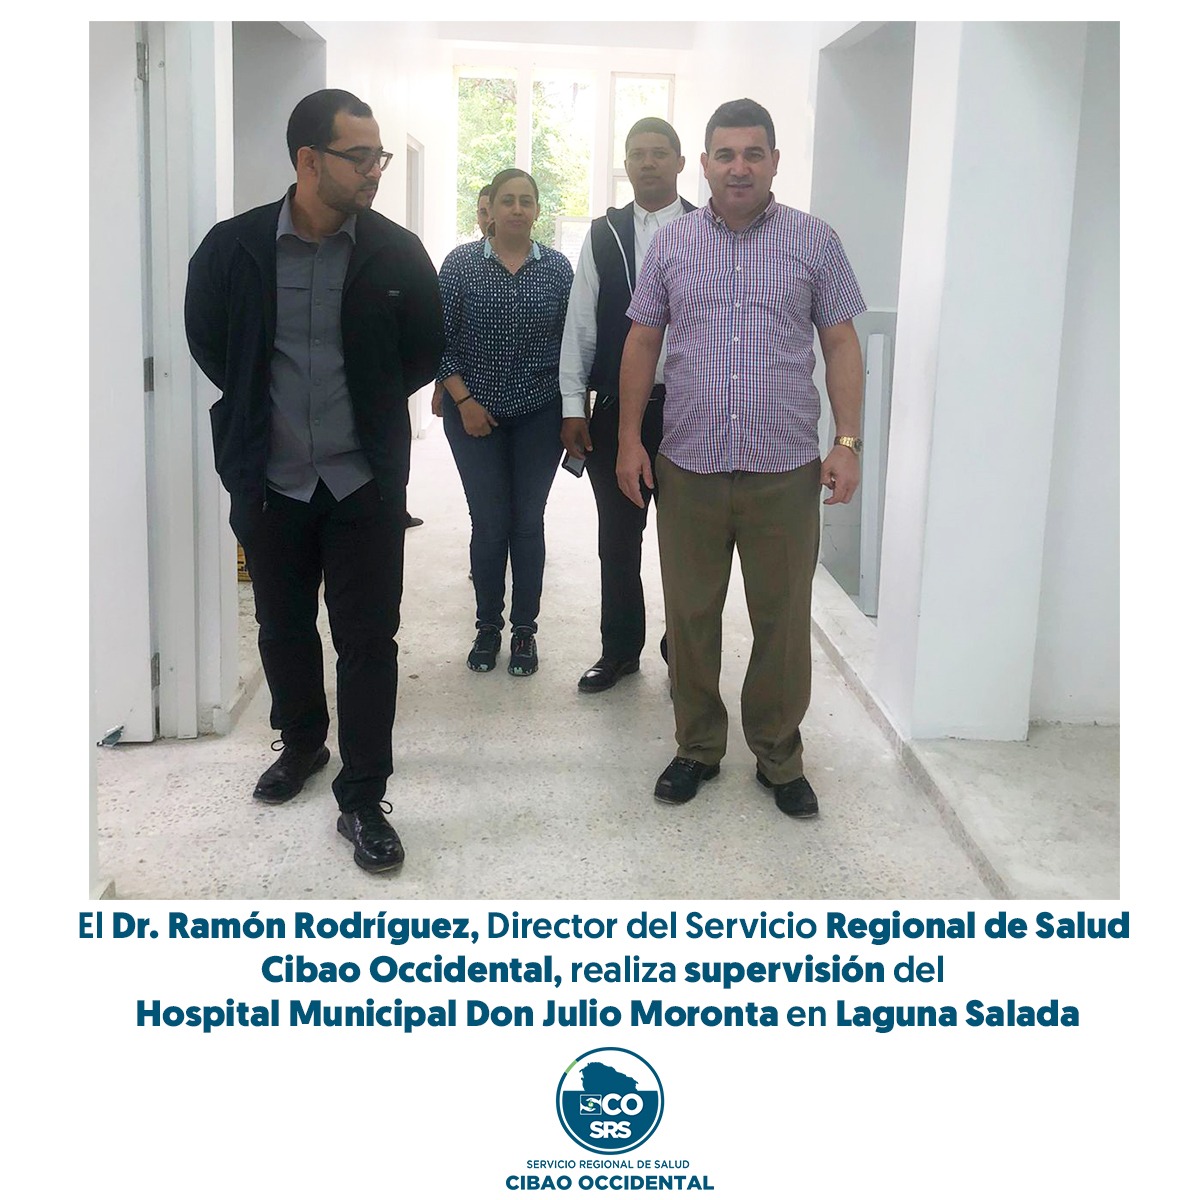 El Dr. Ramon Rodríguez Supervisa Avances en el Hospital Municipal Julio Moronta en Laguna Salada